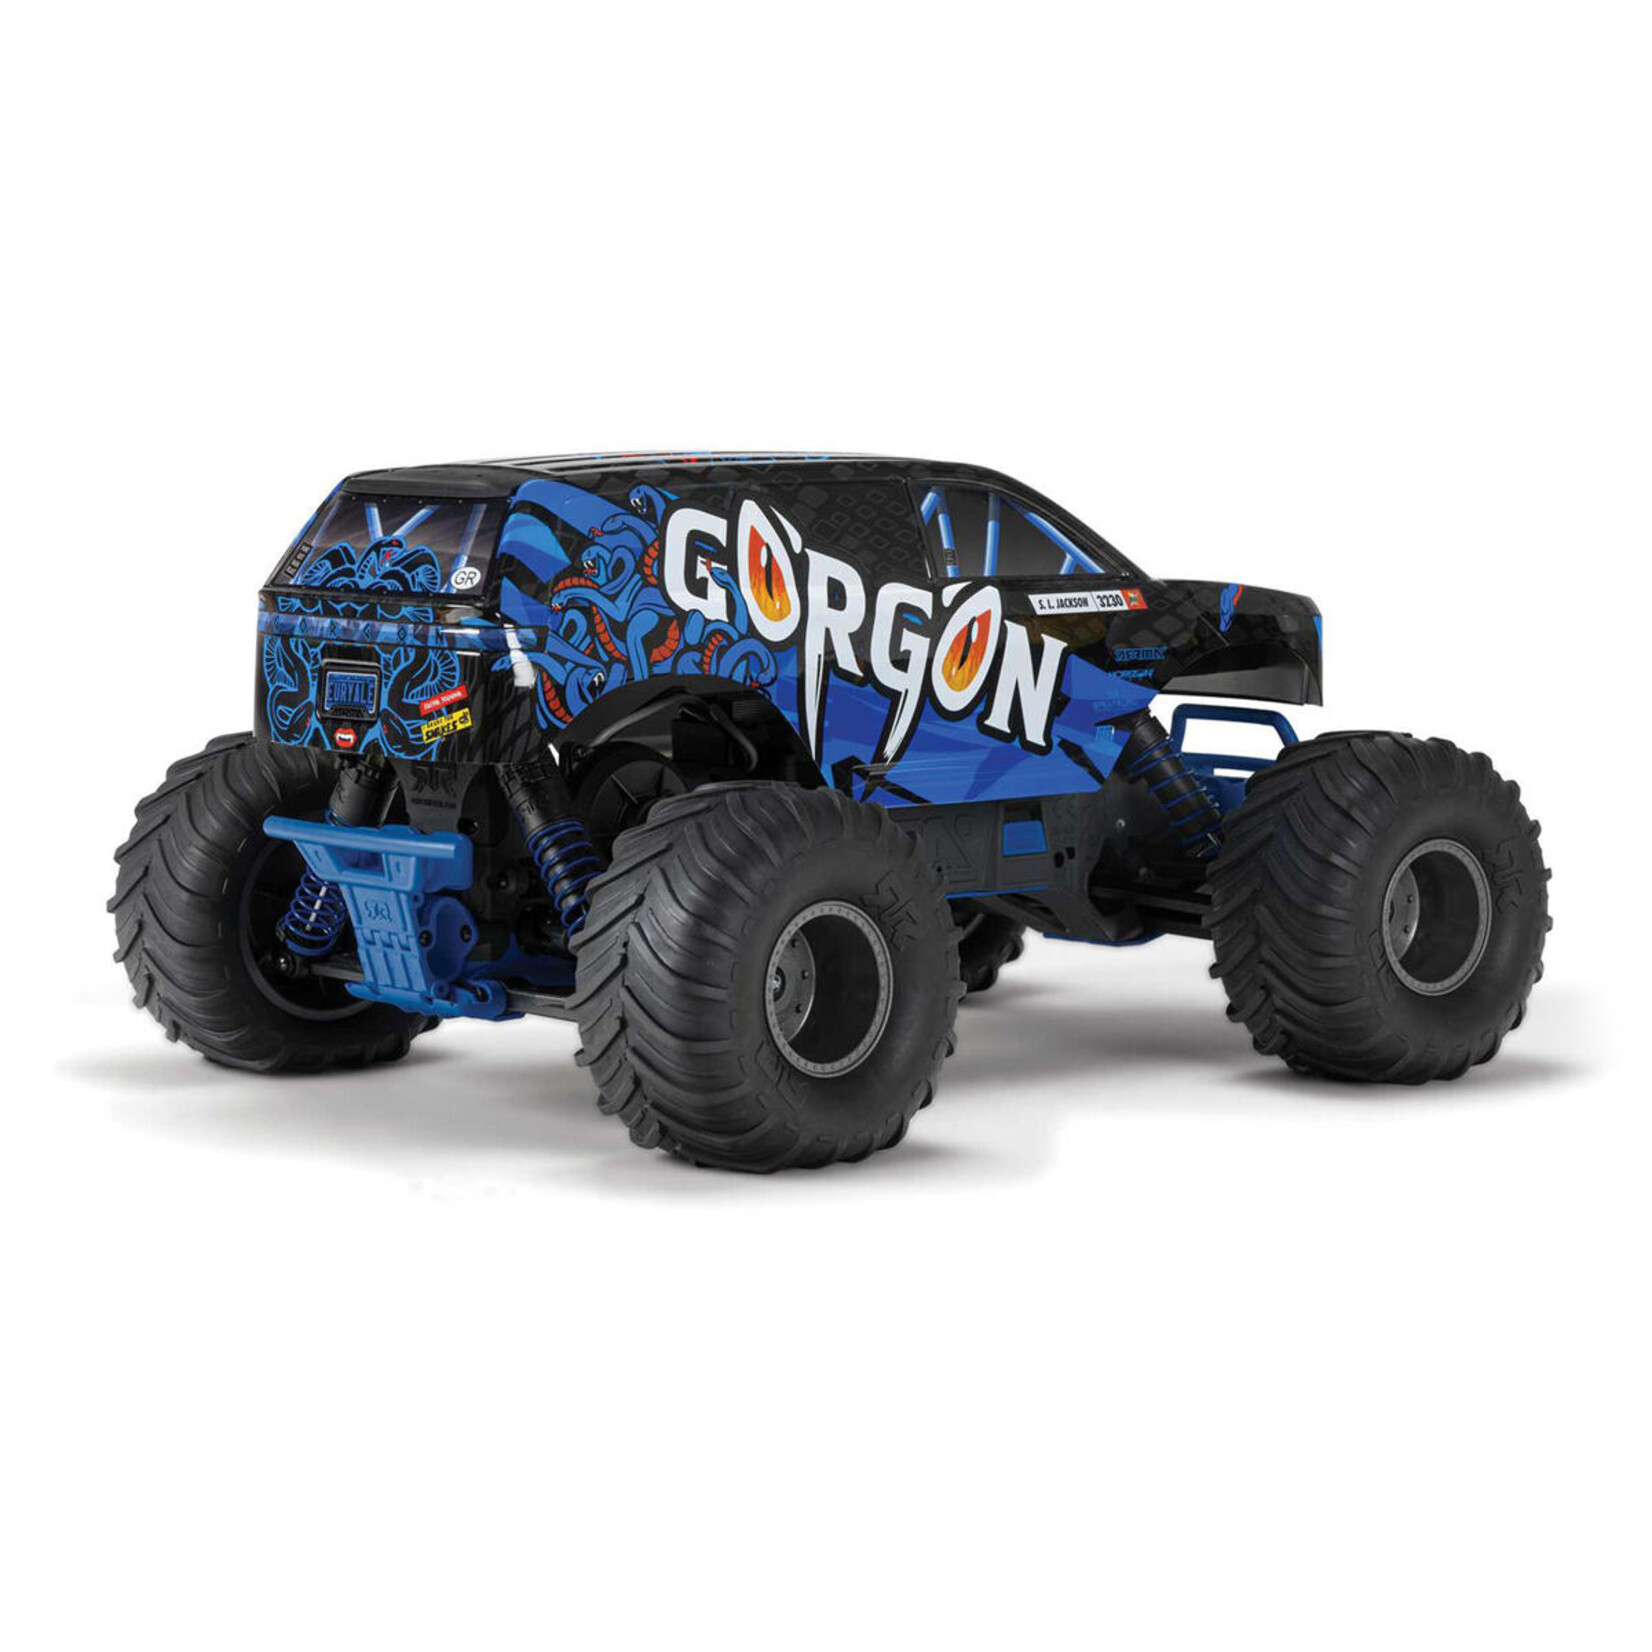 ARRMA Arrma Gorgon 4X2 MEGA 550 Brushed 1/10 Monster Truck RTR (Blue) w/SLT2 2.4GHz Radio #ARA3230T1